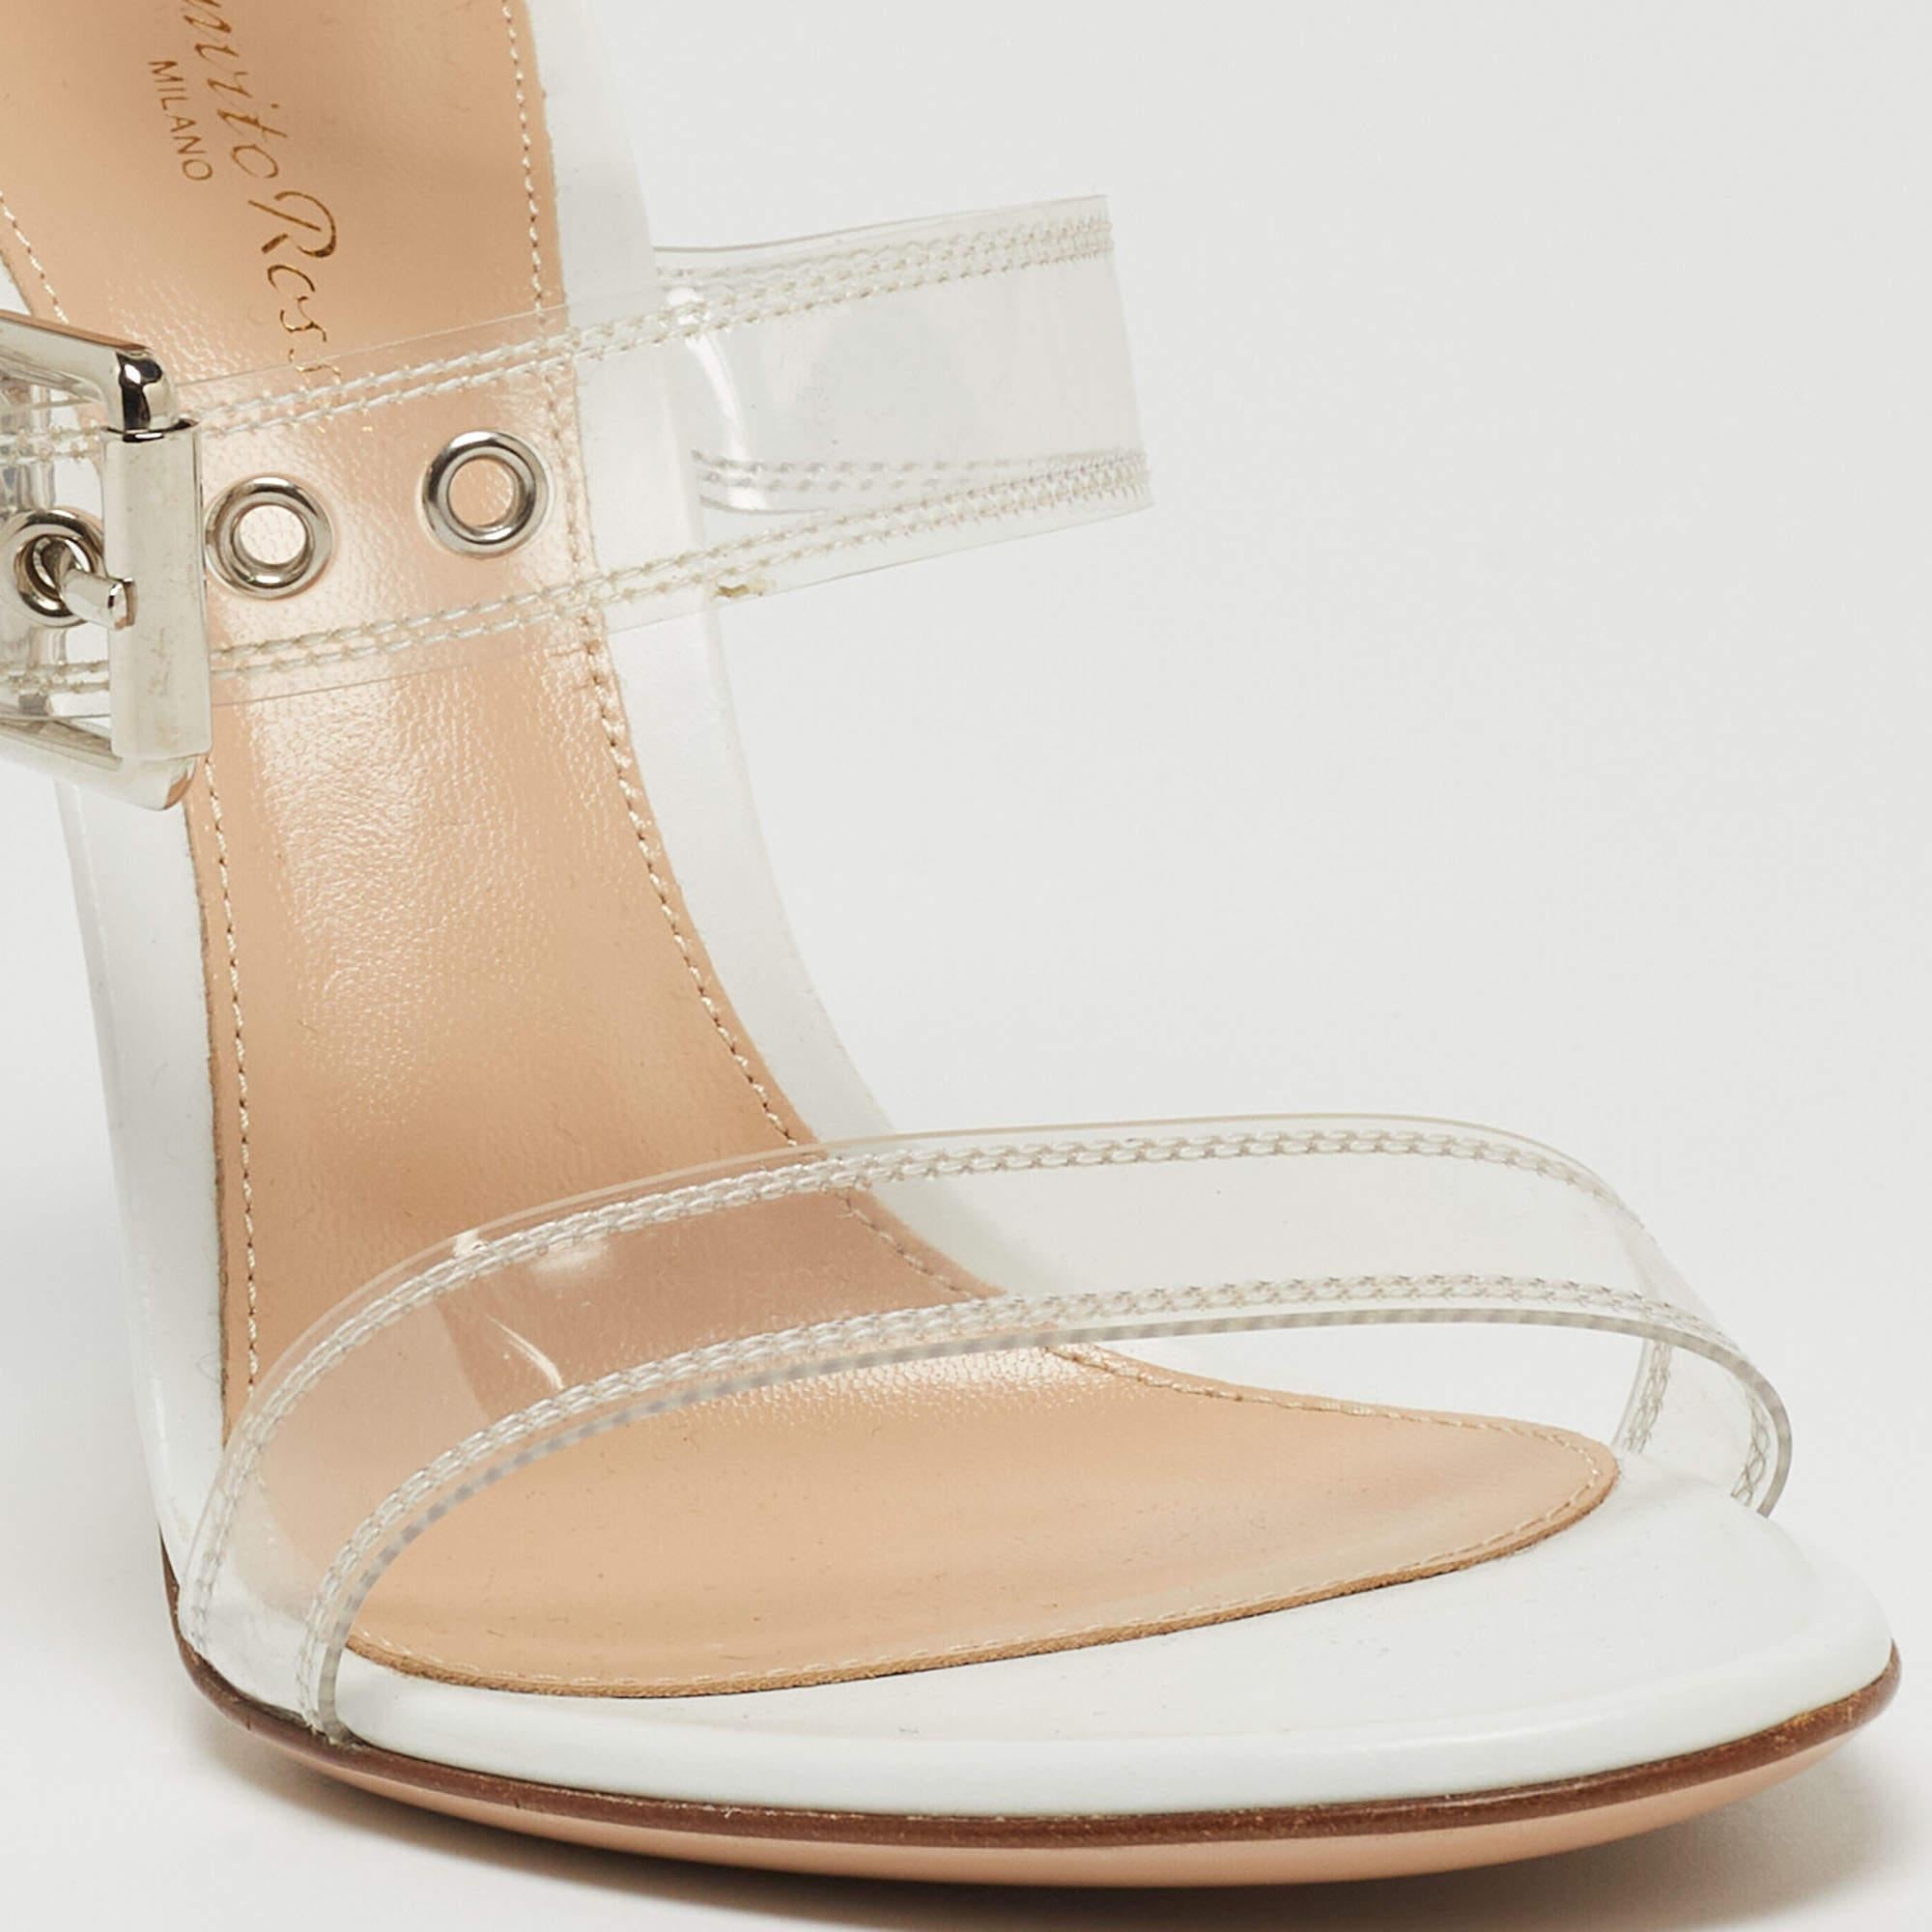 Gianvito Rossi White Leather and PVC Ankle Strap Sandals Size 39 In Excellent Condition For Sale In Dubai, Al Qouz 2